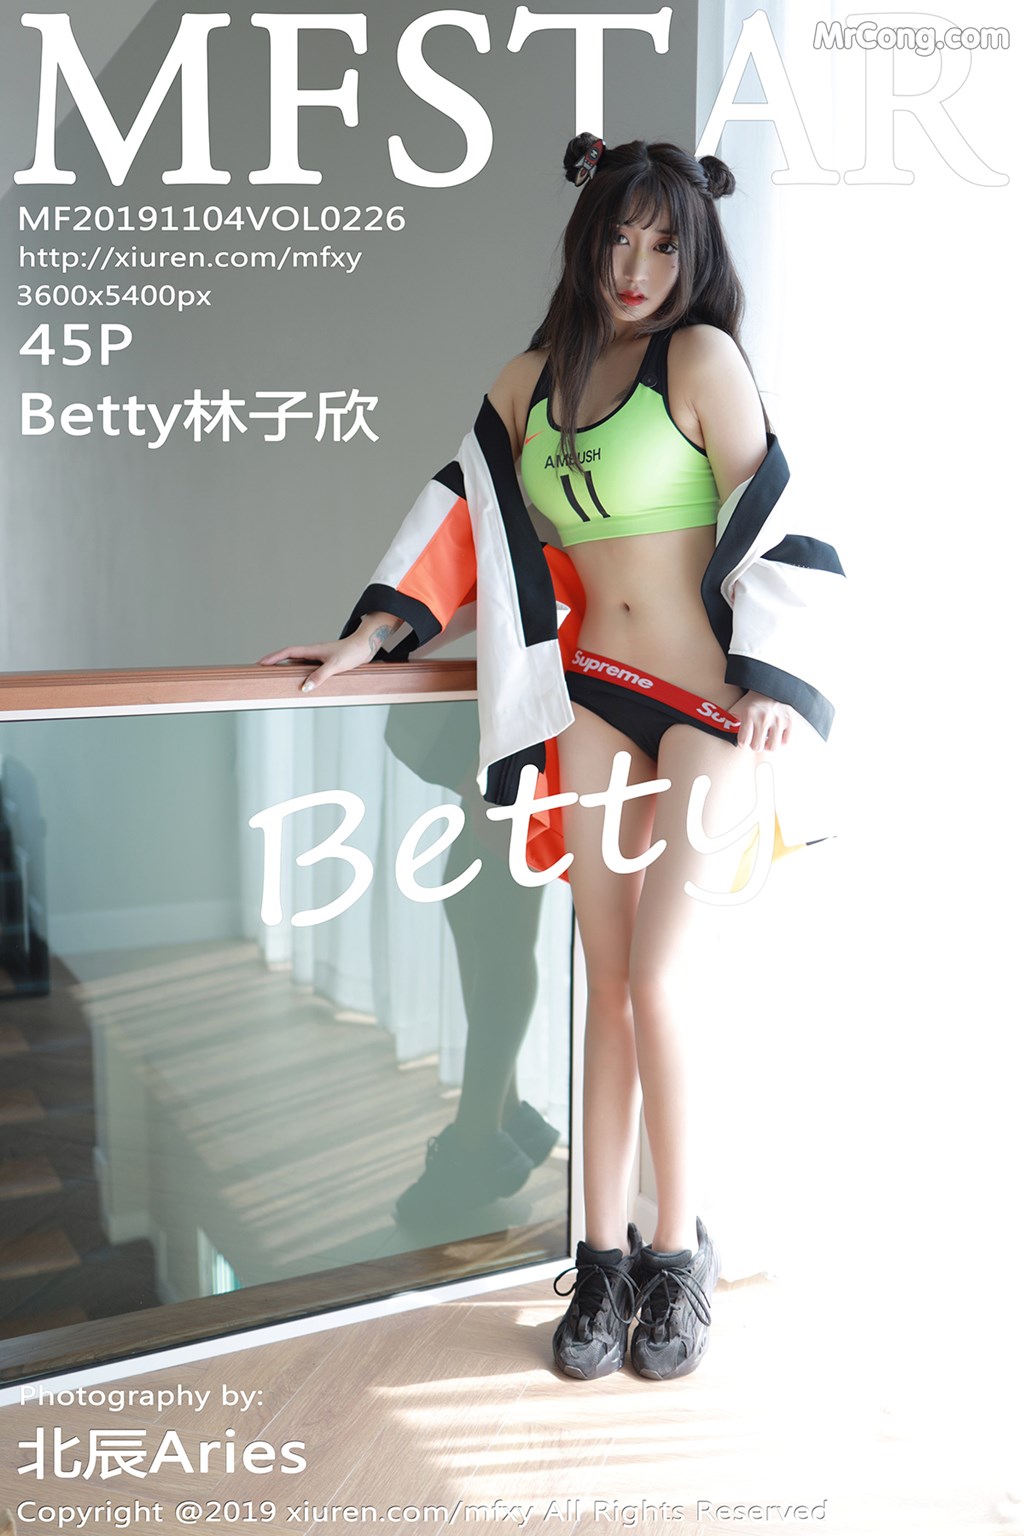 MFStar Vol. 262: Betty 林子欣 (46 photos) photo 1-0